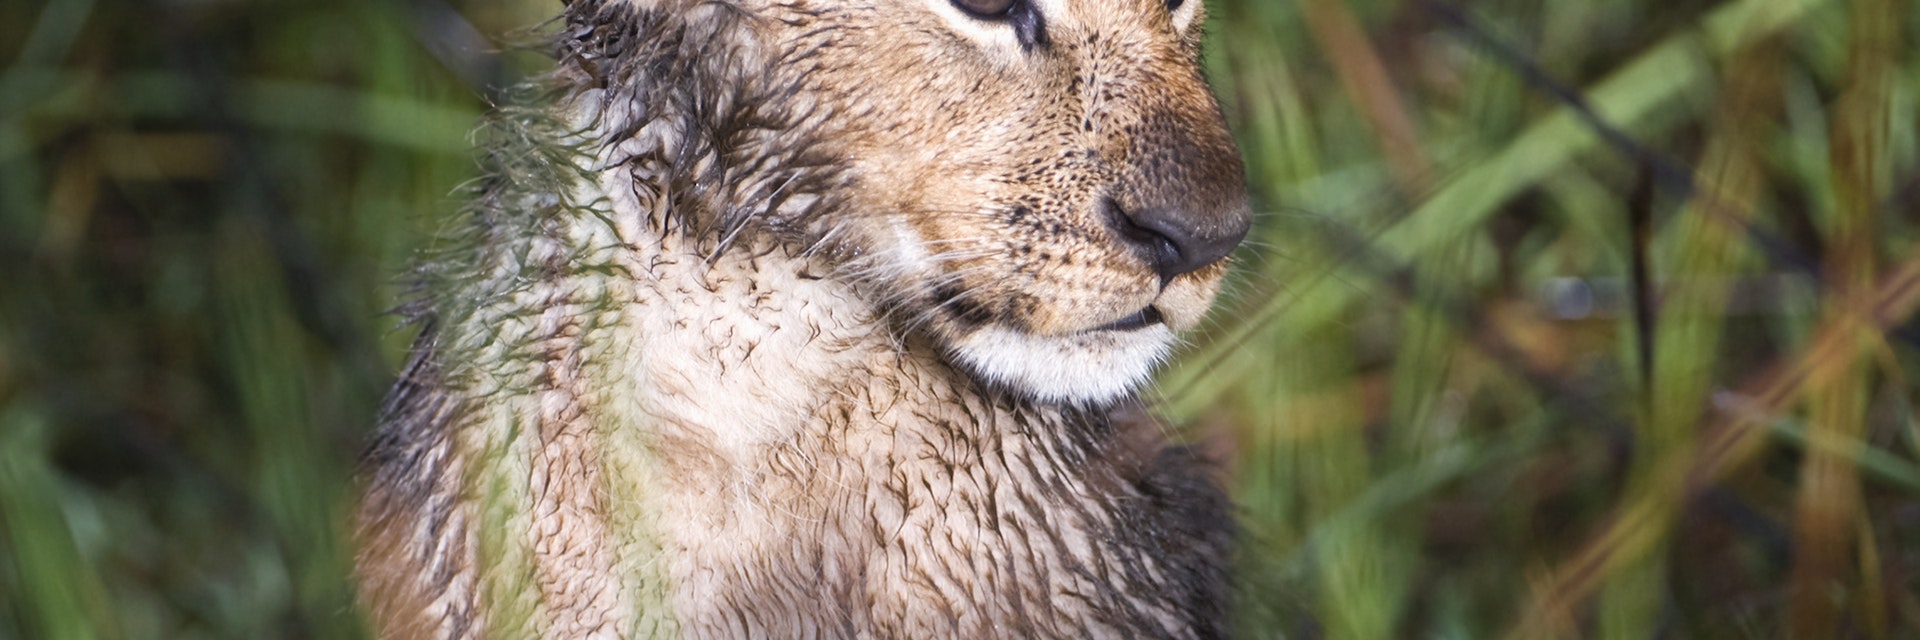 Wet Lion cub (Panthera Leo) in Okavango swamp, Chiefs Island, Moremi National Park, Botswana
Chiefs Island, Lion, Moremi Wildlife Reserve